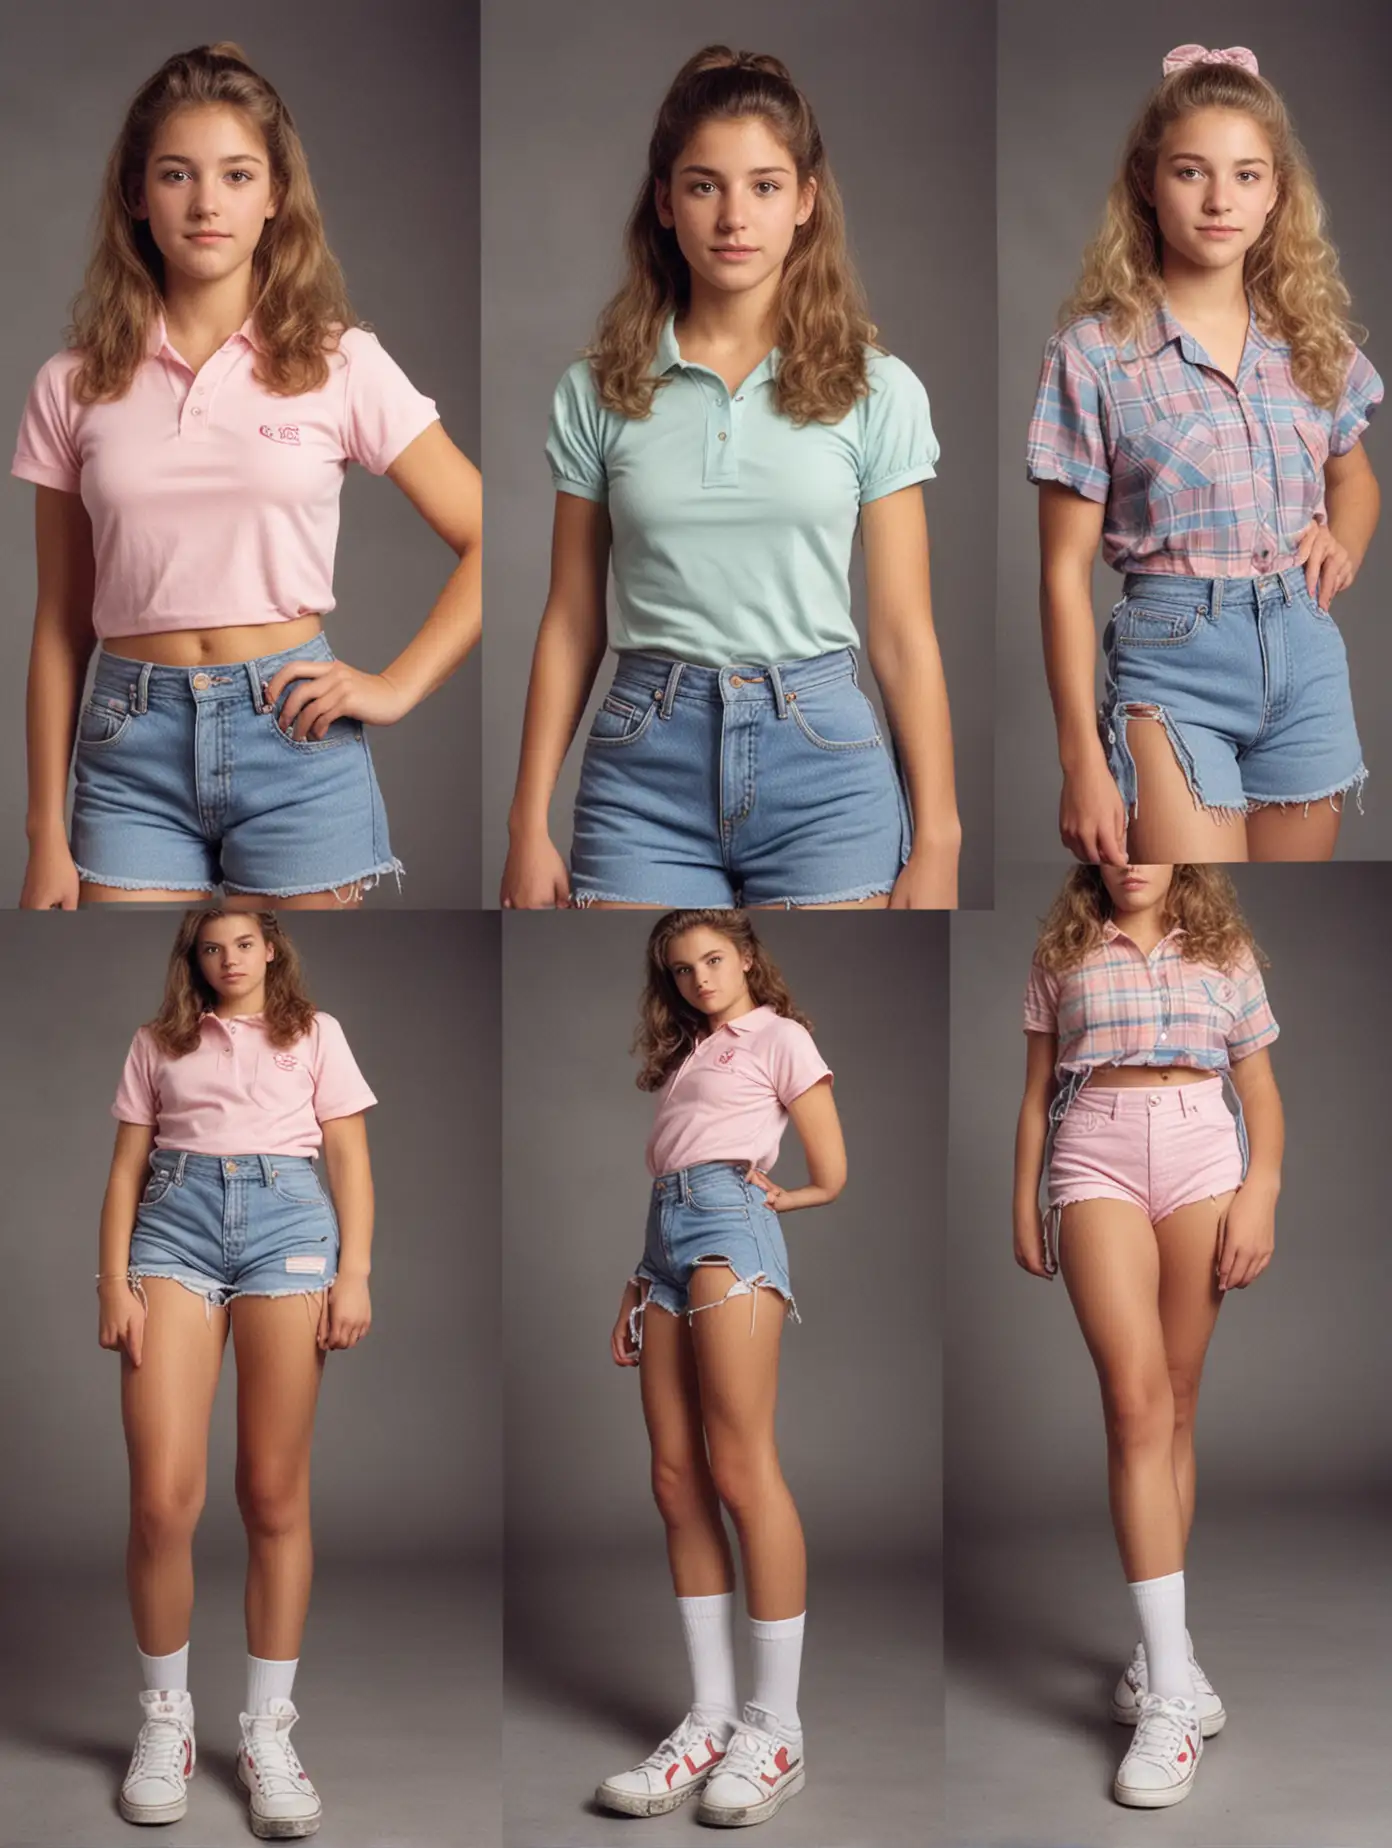 Vintage American School Girls 80s and 90s Nostalgia